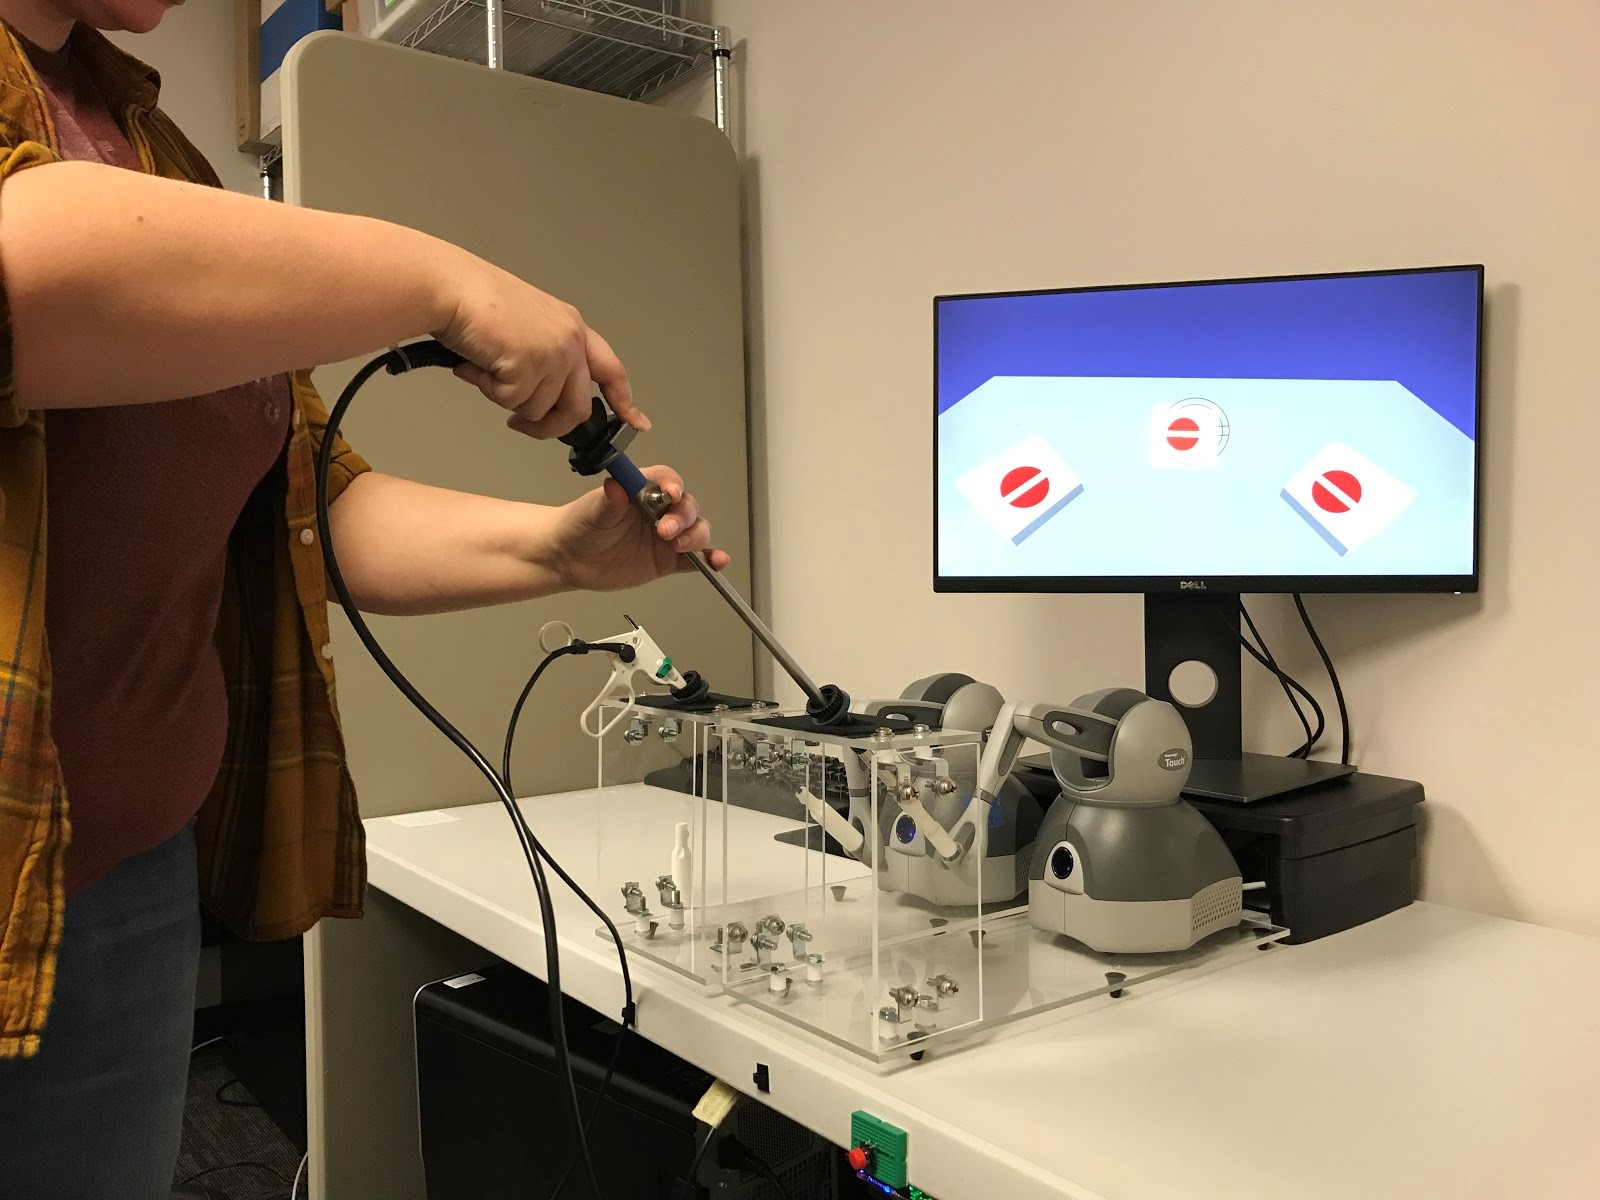 Operative Experience Demos RealMom Birthing Simulator at IMSH 2018